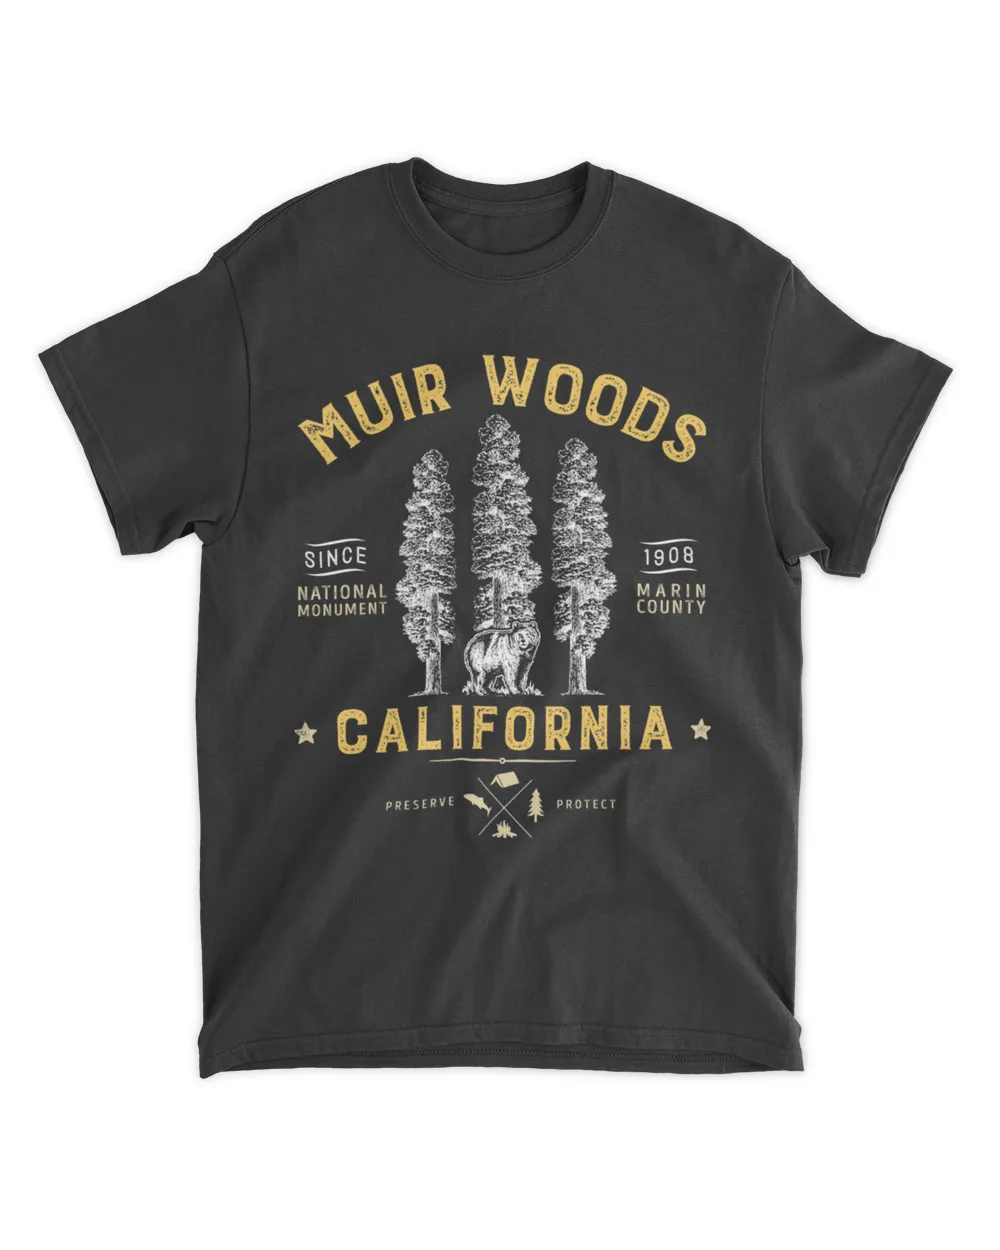 Hiking Muir Woods National Monument T Shirt California Redwood Park